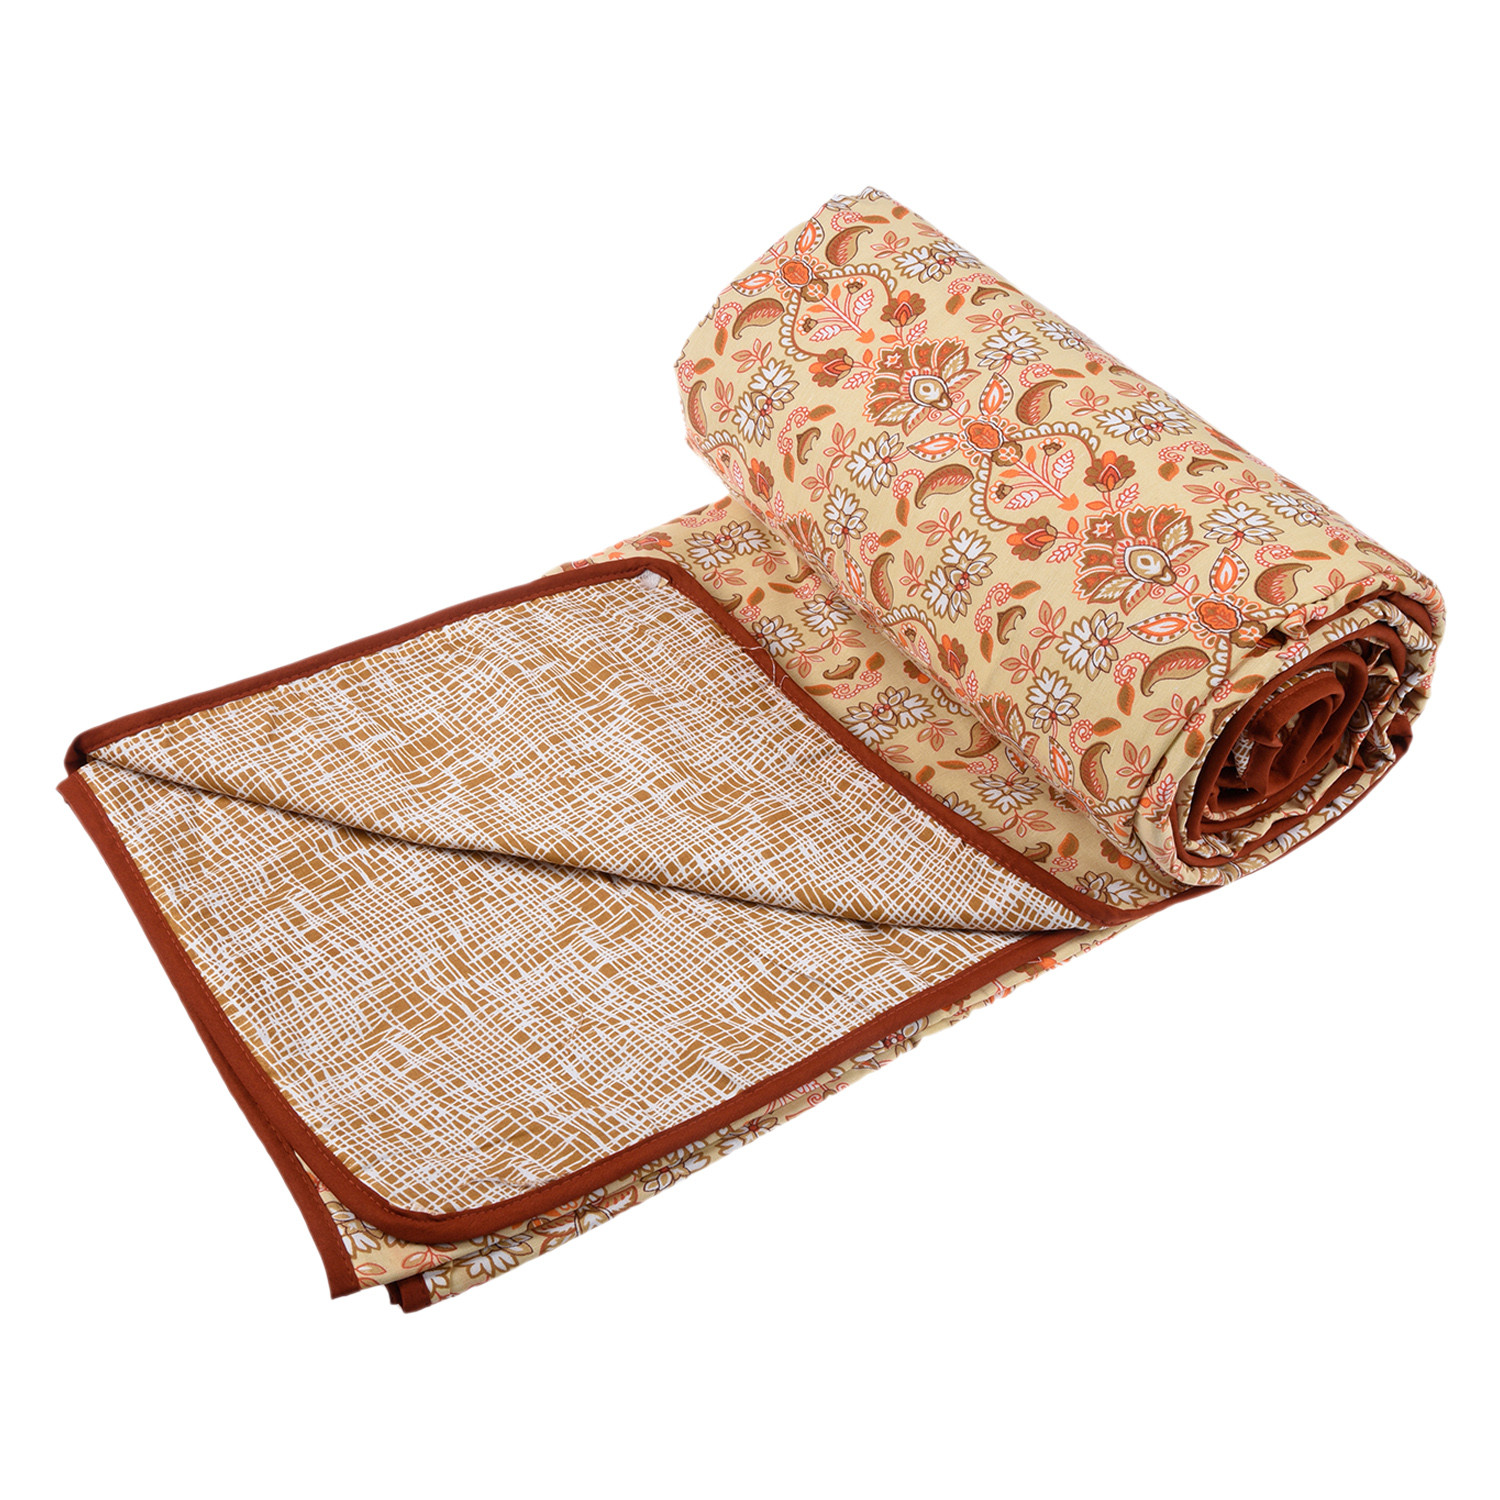 Kuber Industries Blanket | Cotton Double Bed Dohar | Blanket For Home | Reversible AC Blanket For Travelling | Blanket For Summer | Blanket For Winters | Carry Print | Orange